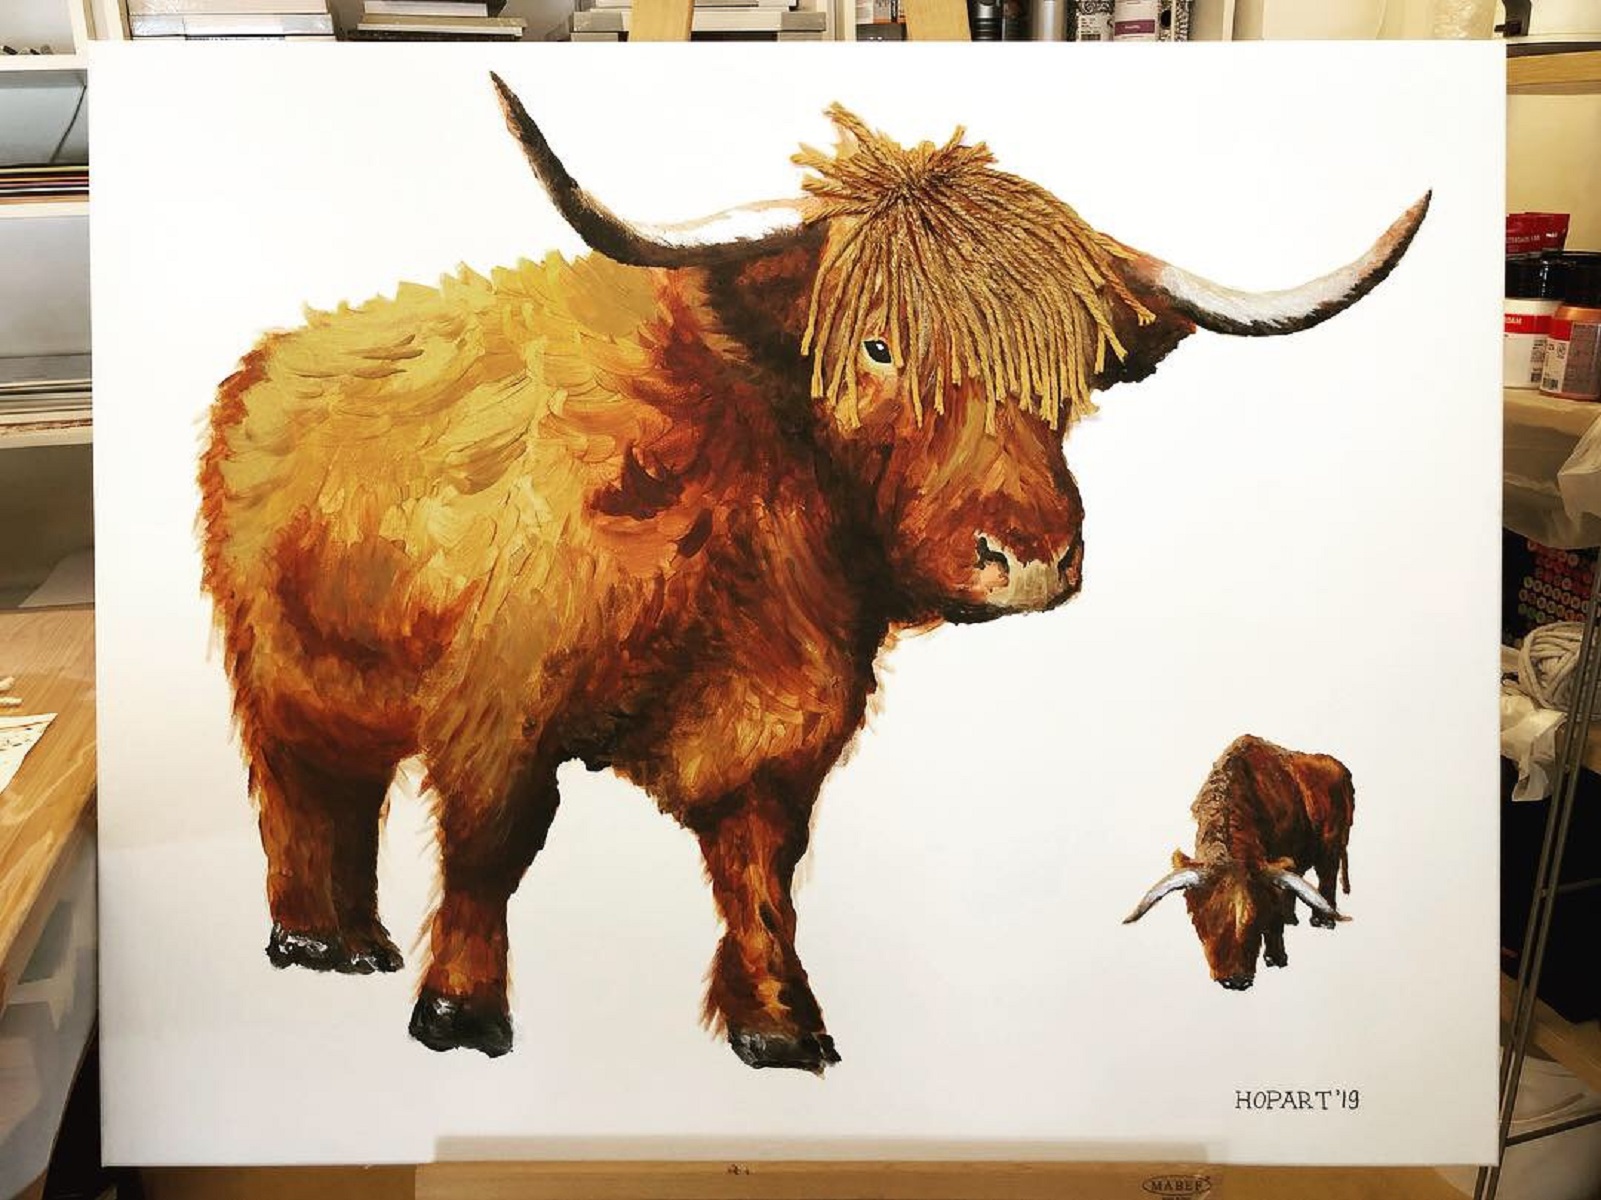 Scottish Highlander on canvas with textile